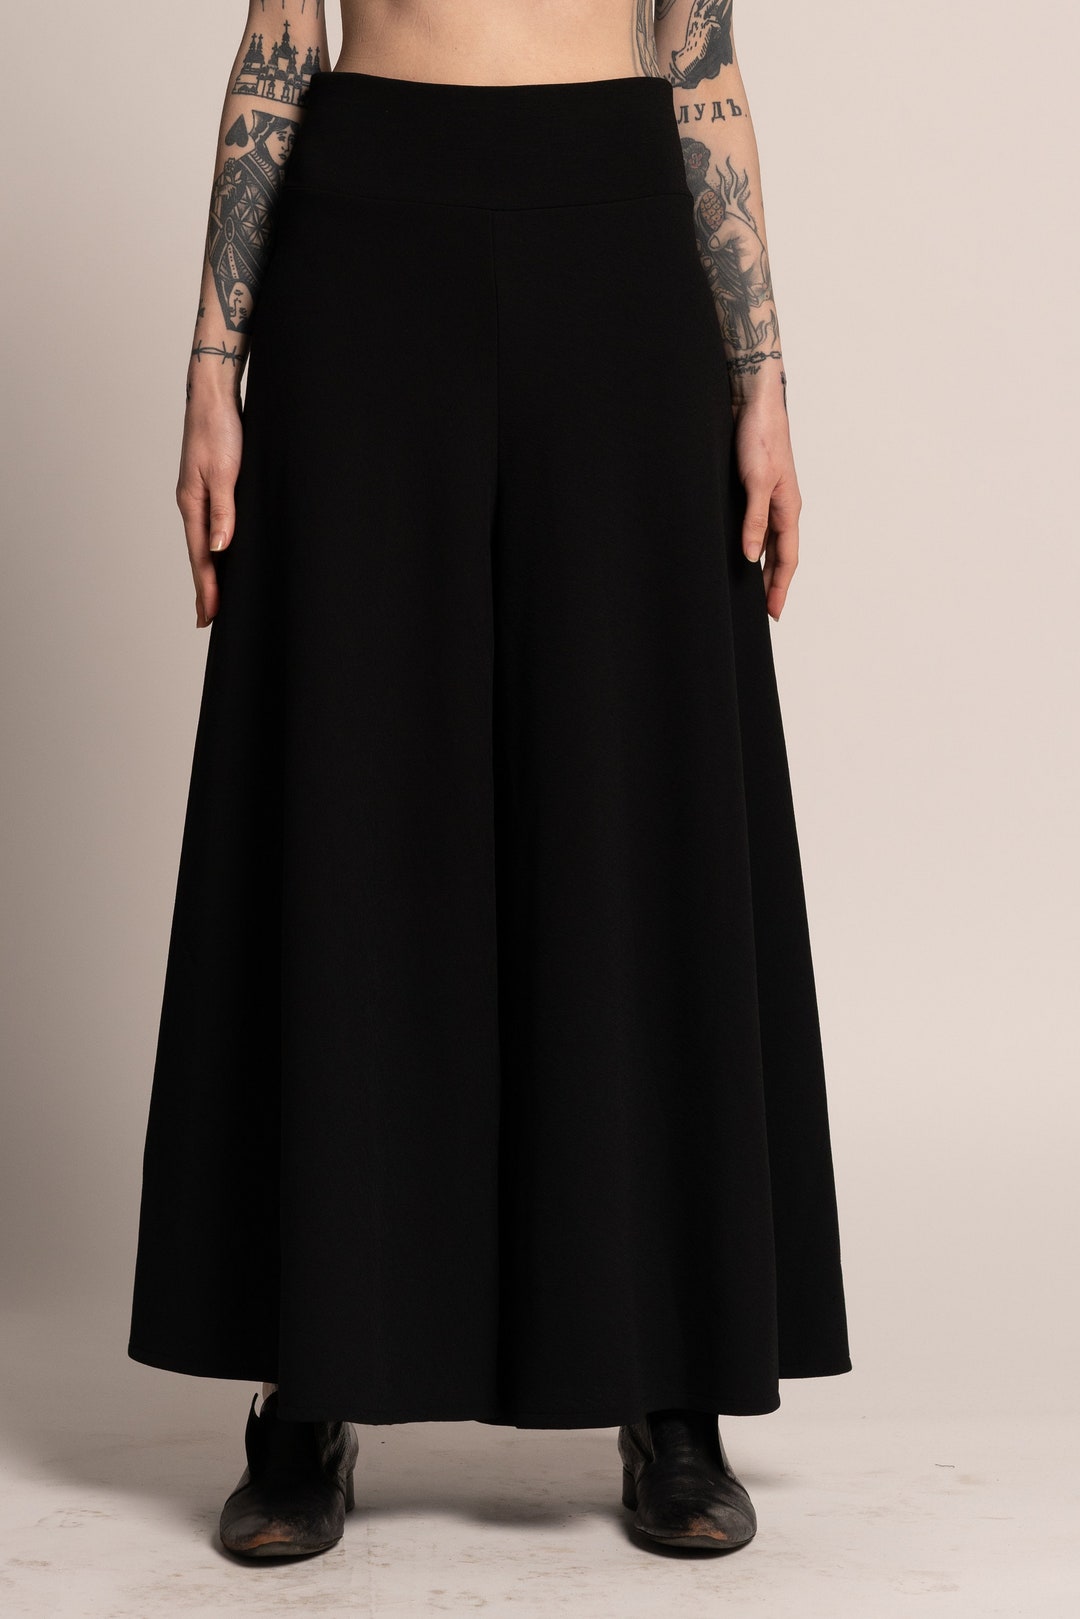 Black Wide Leg Palazzo Pants Women Evening Elegant Skirt - Etsy